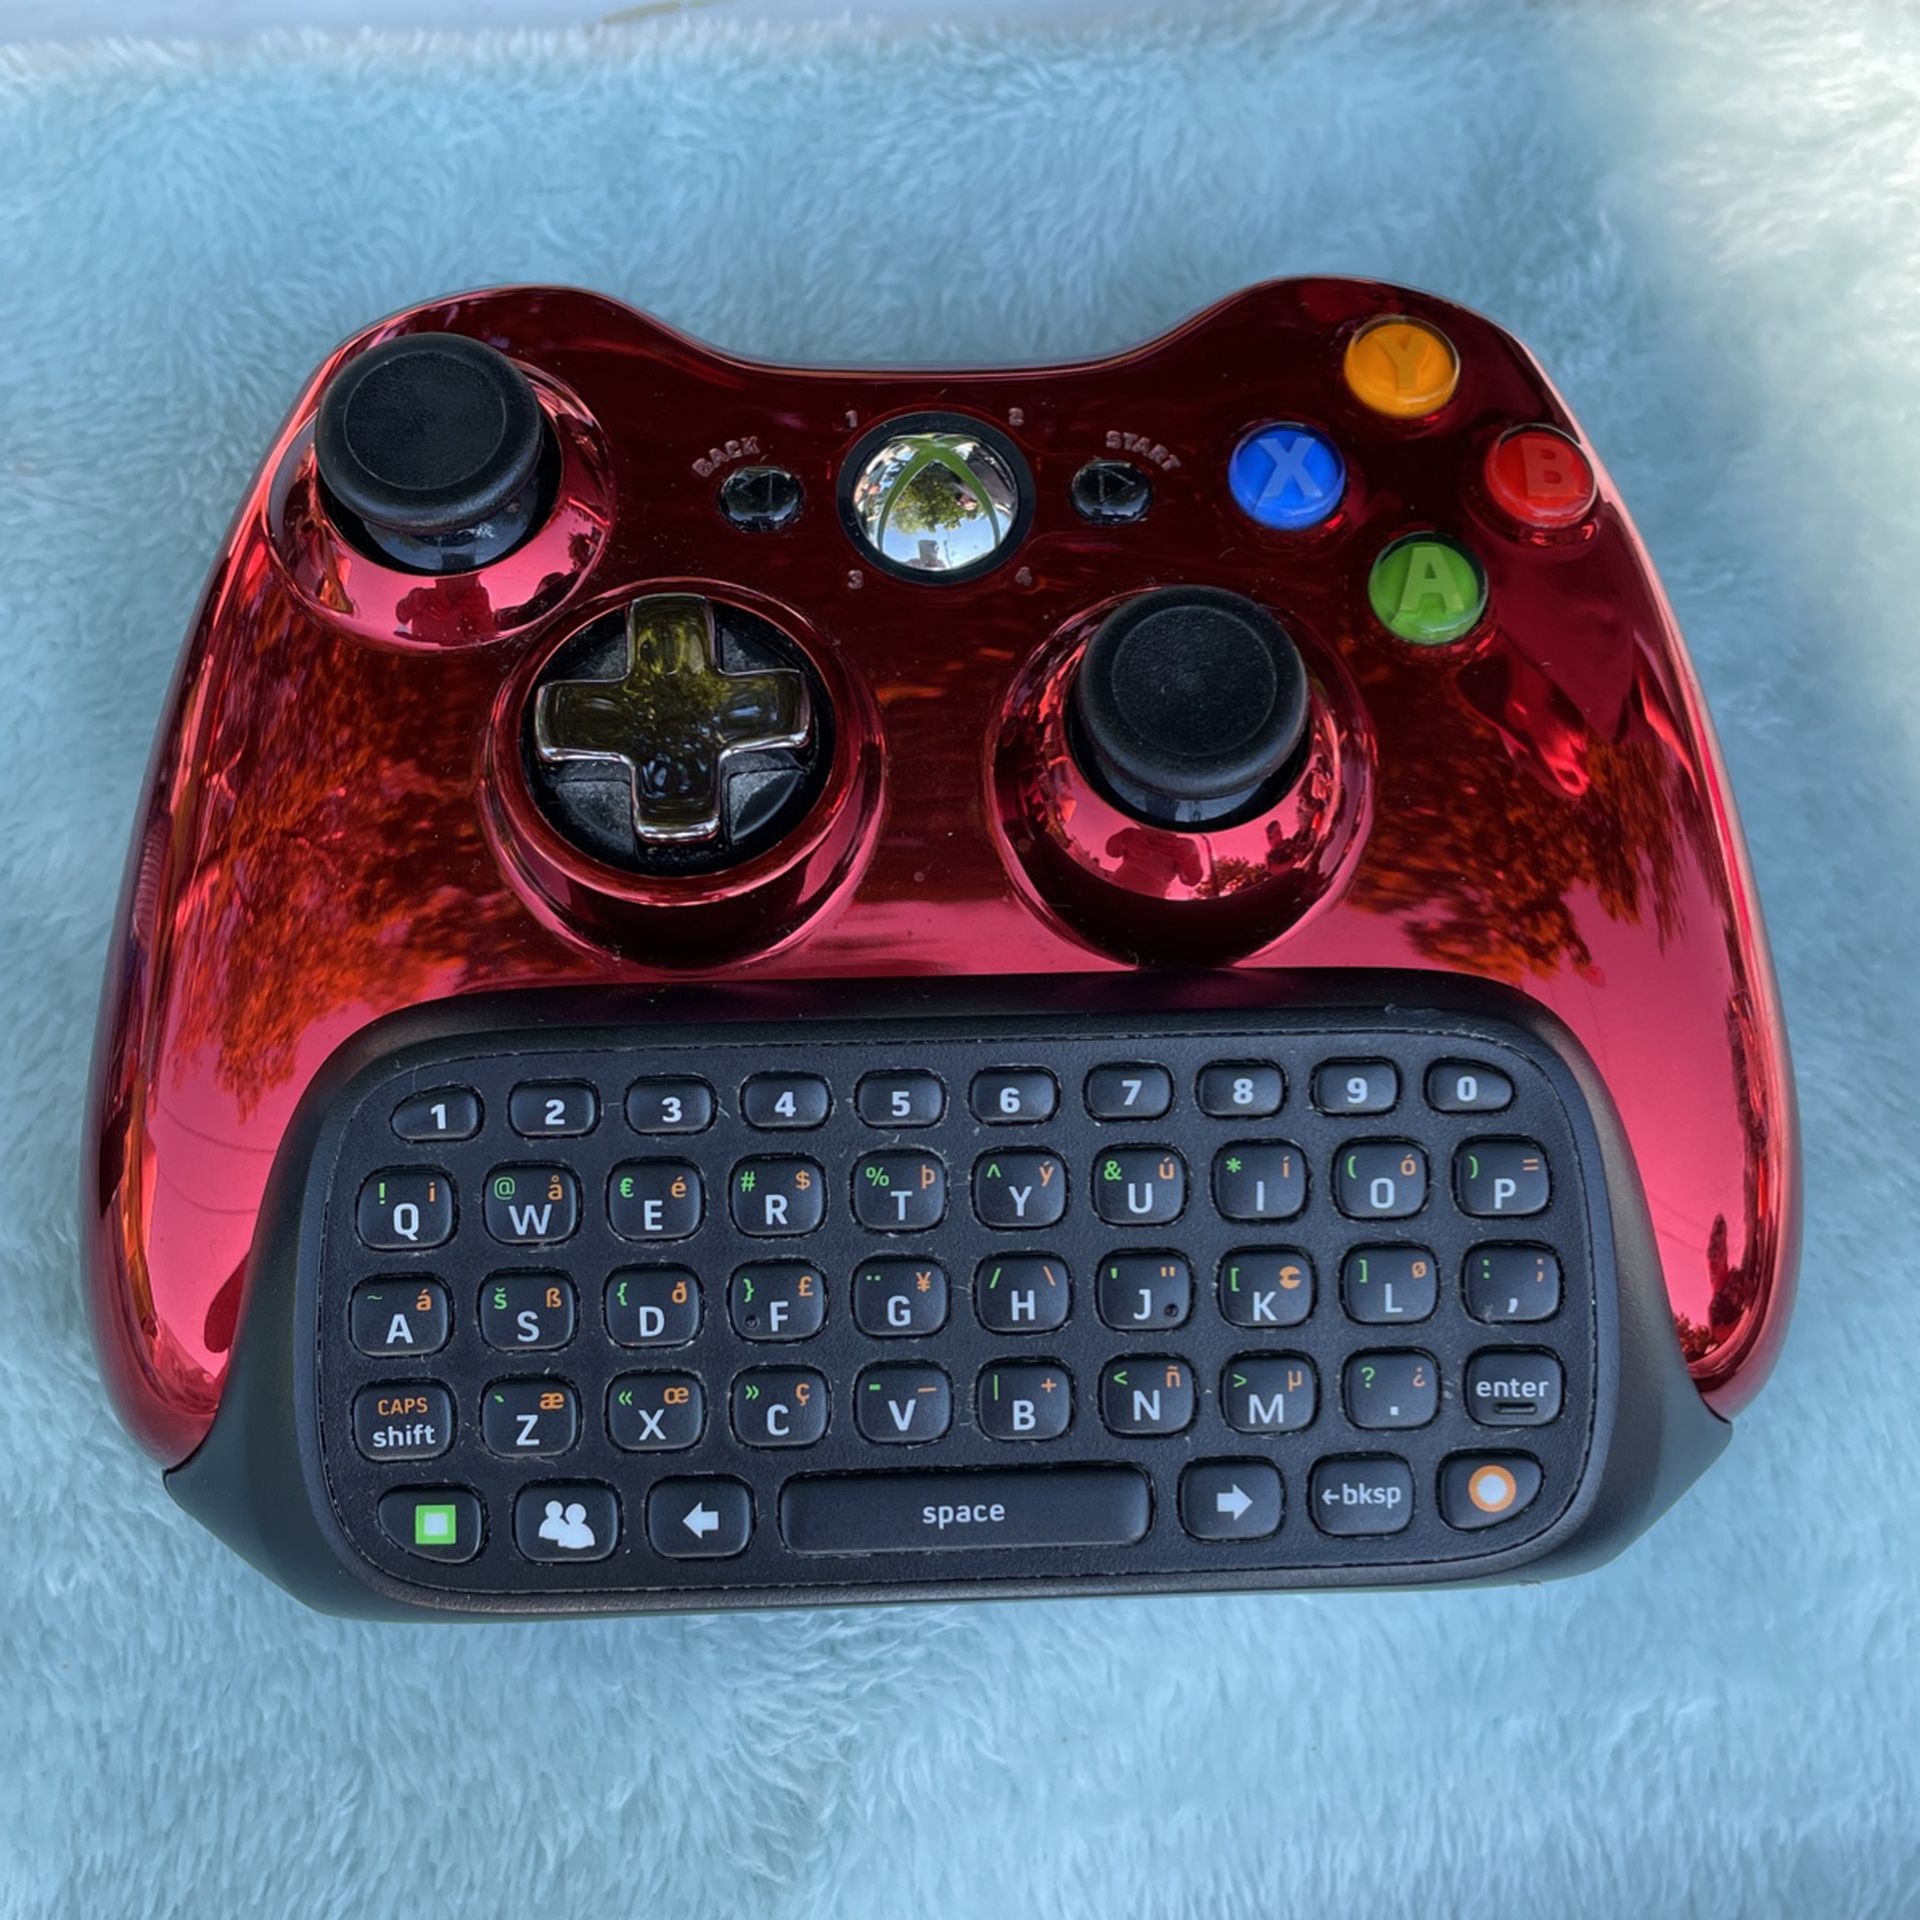 Xbox 360 Crome Controller With Detachable Controller